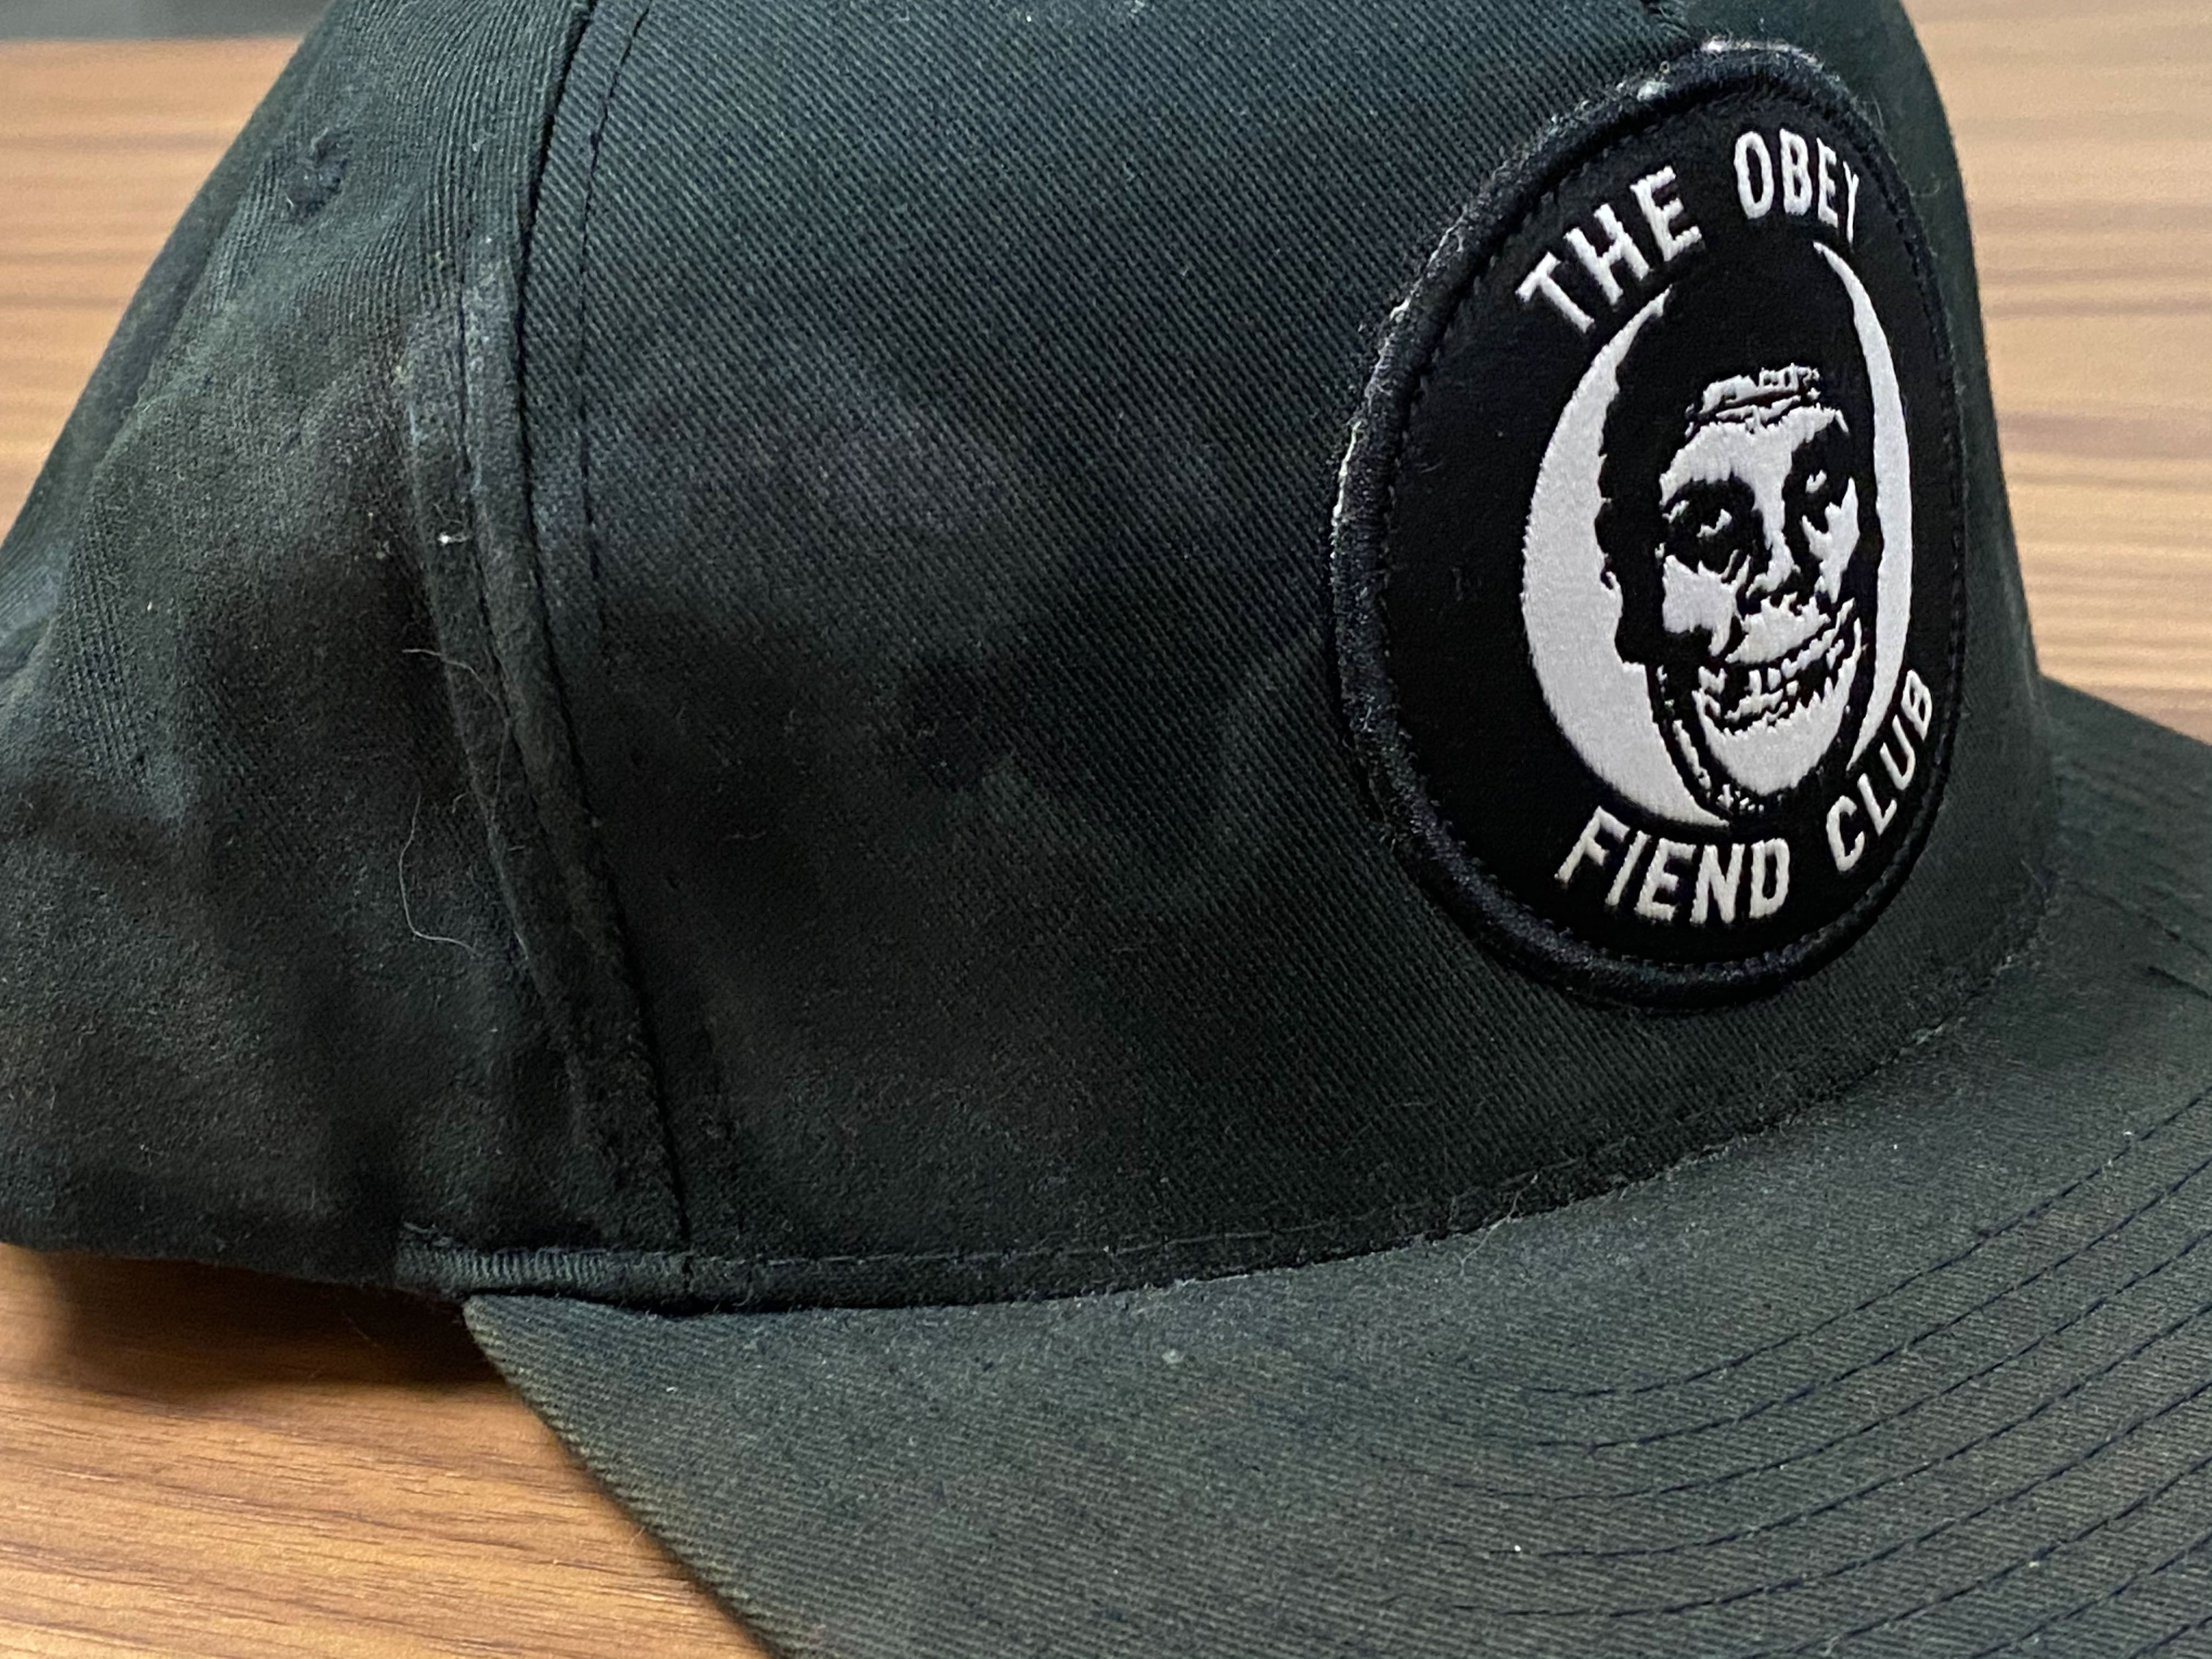 Obey Fiend Club Hat - Black